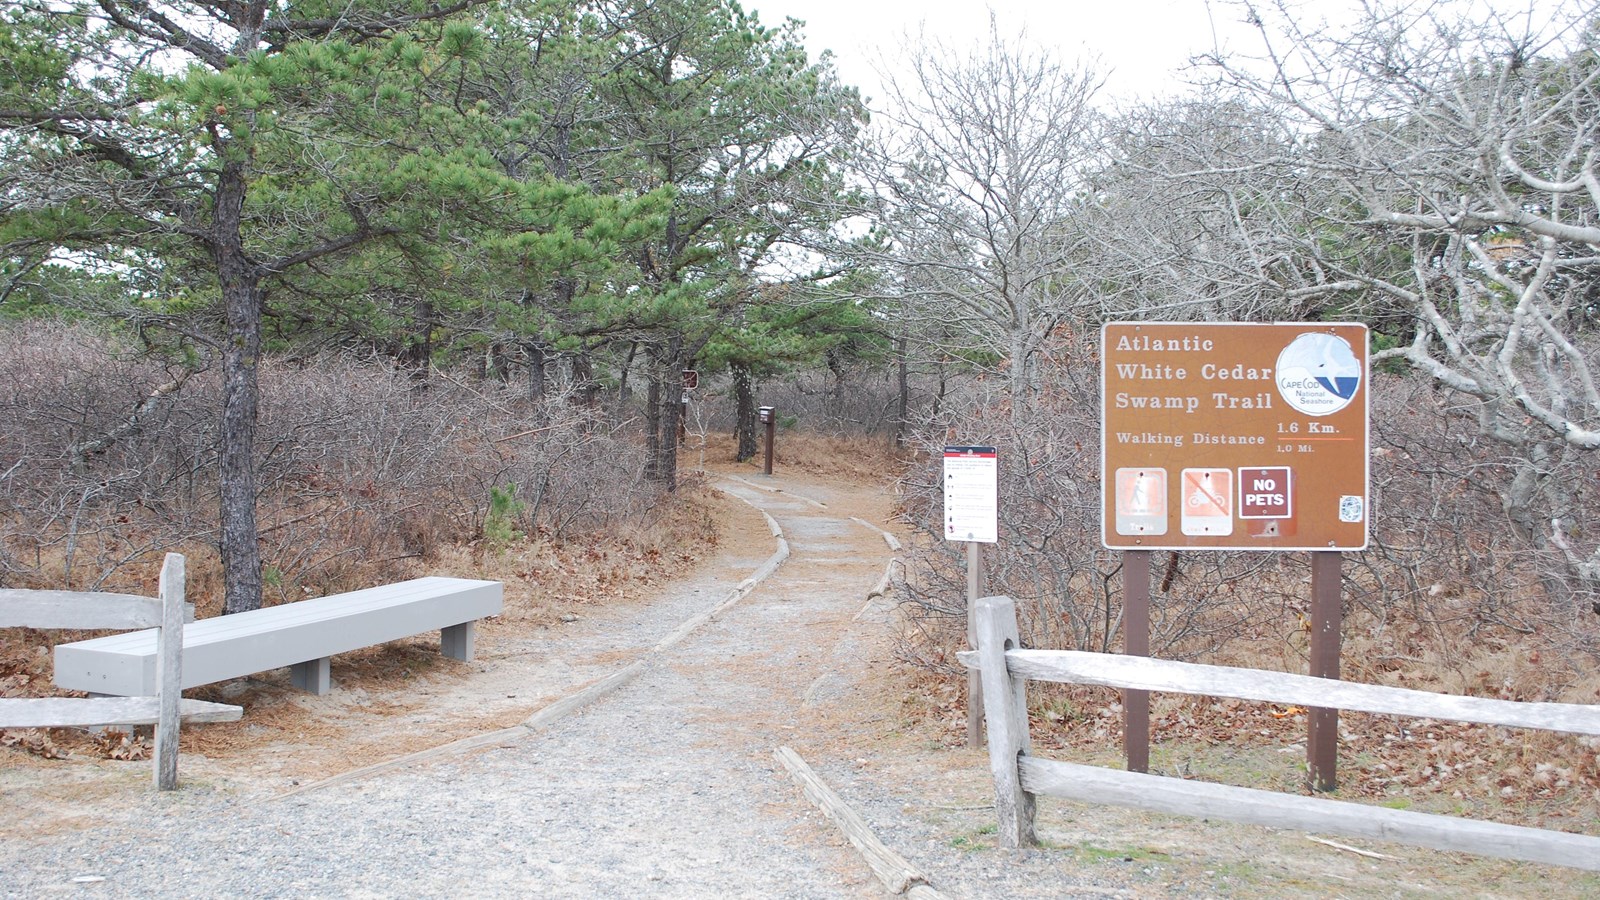 Trailhead of the Atlantic White Cedar Swamp. Gravel trail with regulation signage.